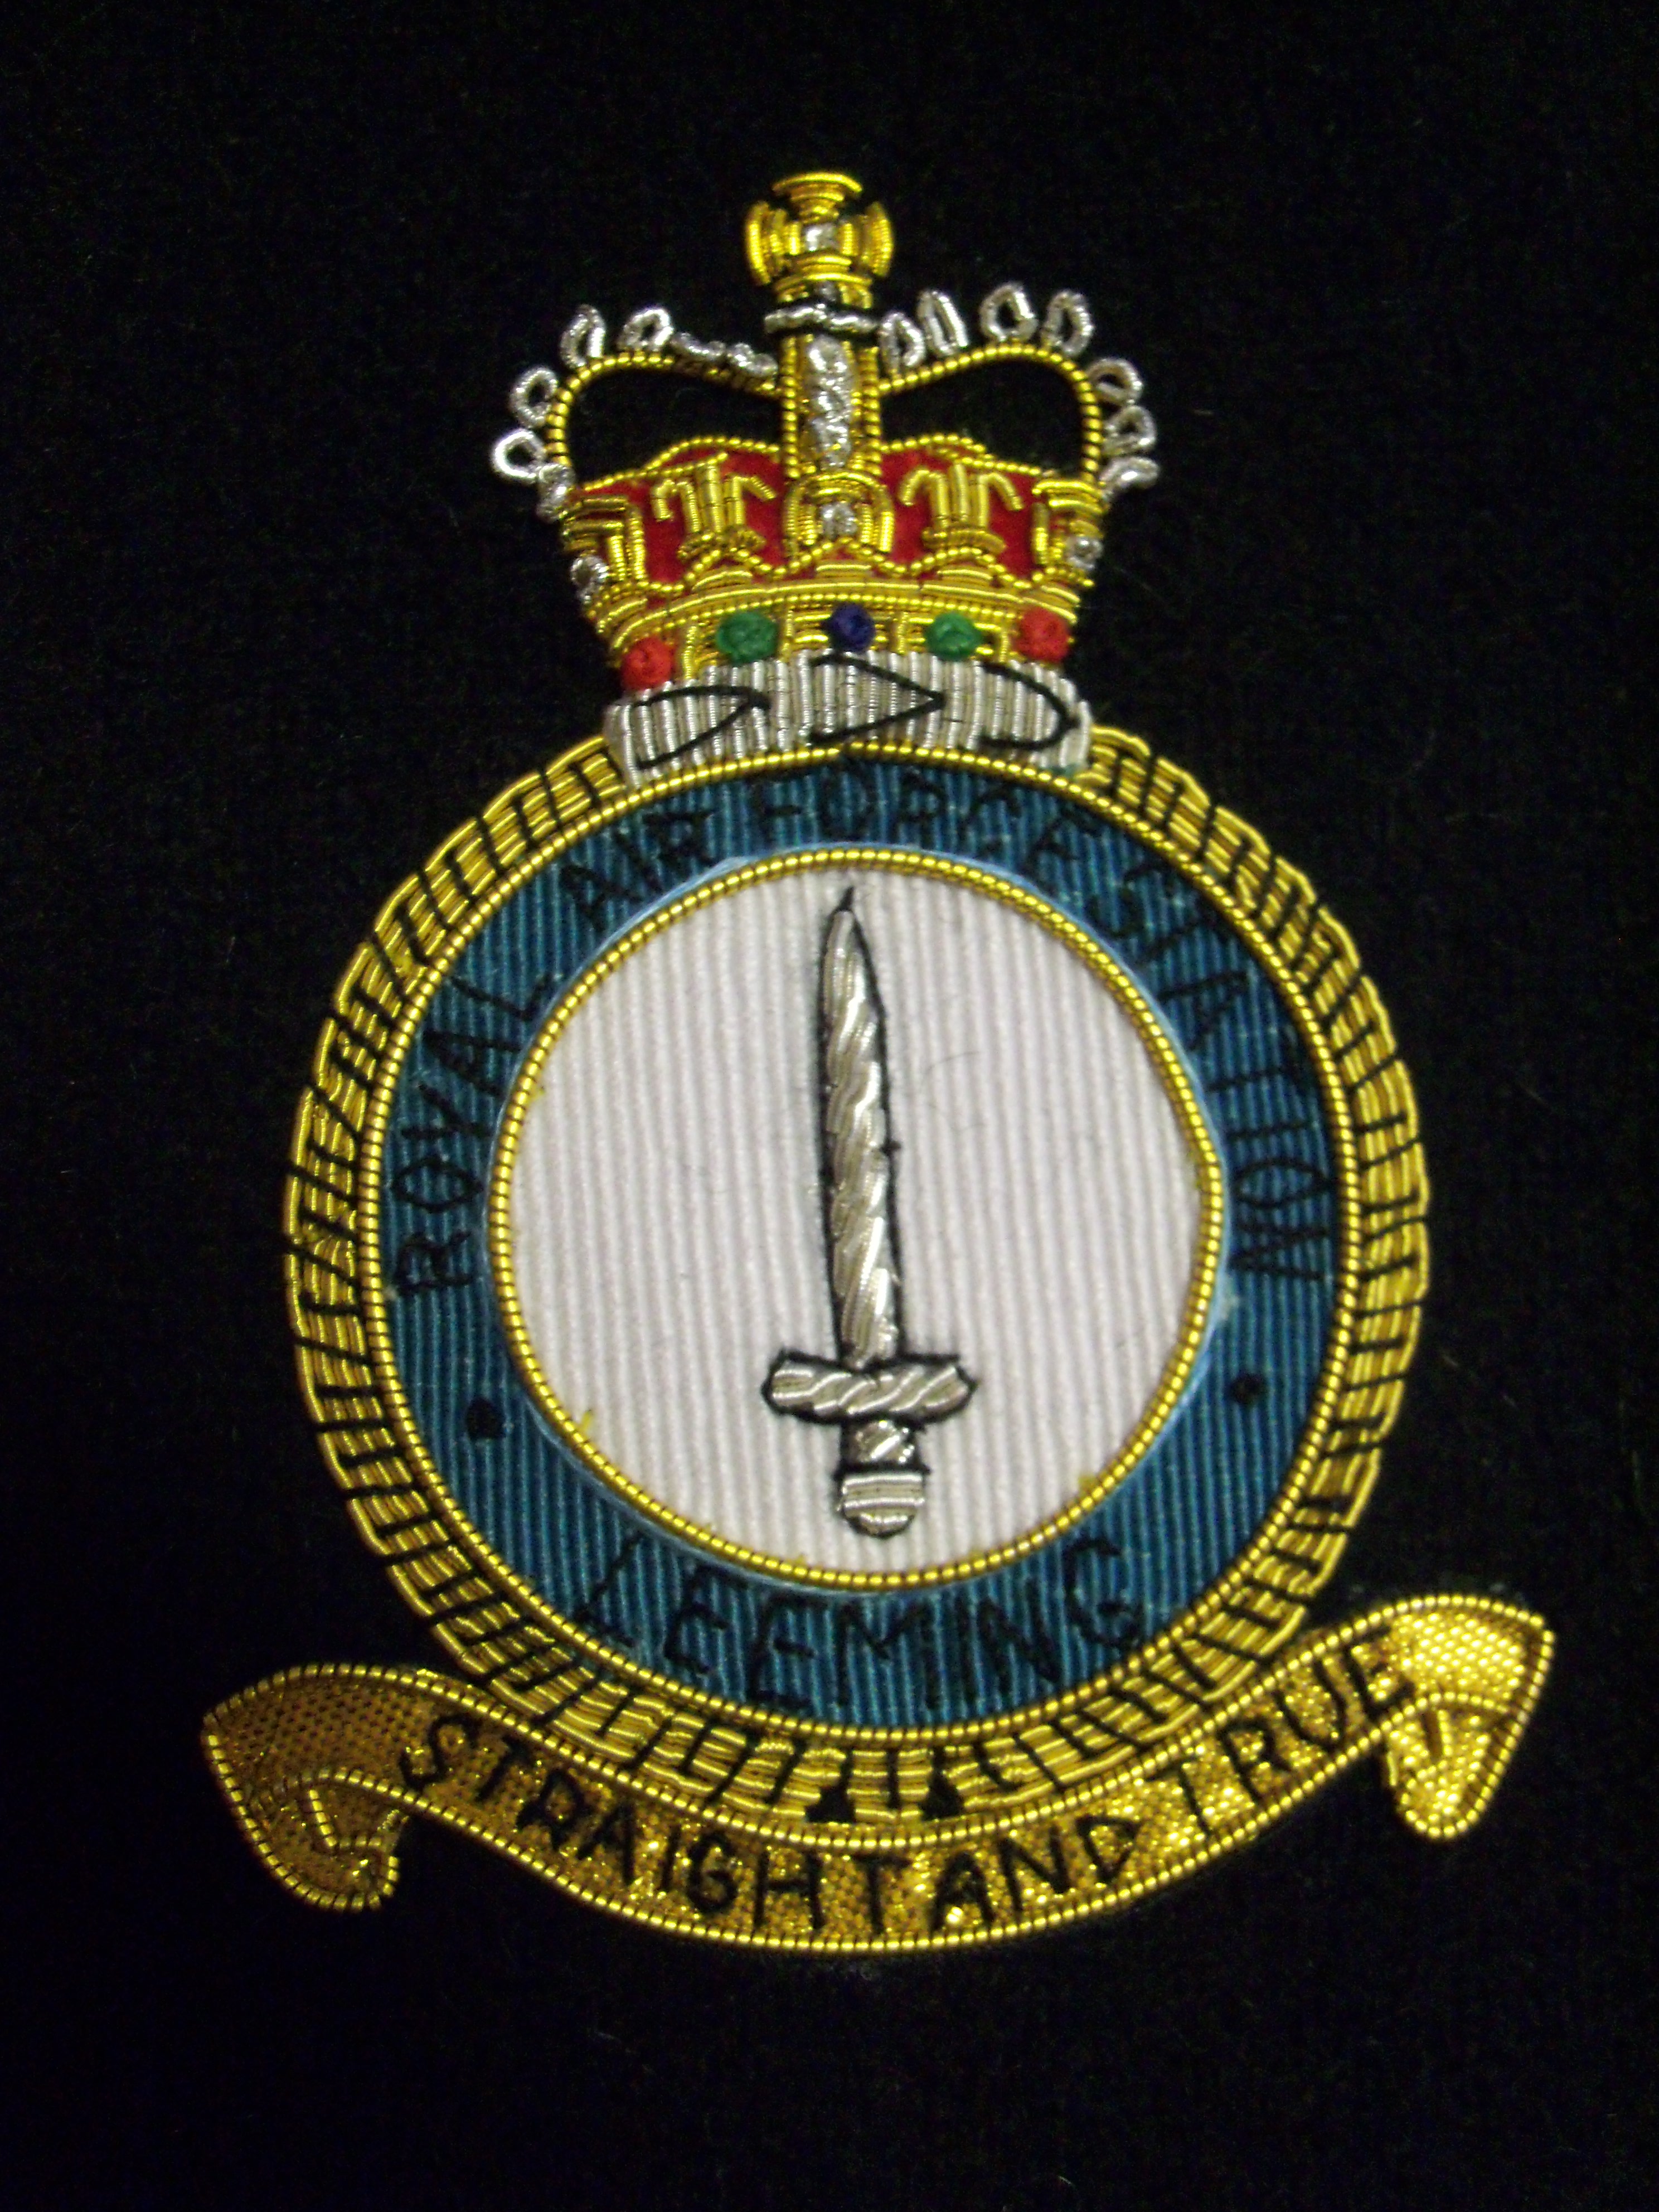 Small Embroidered Badge - RAF Leeming